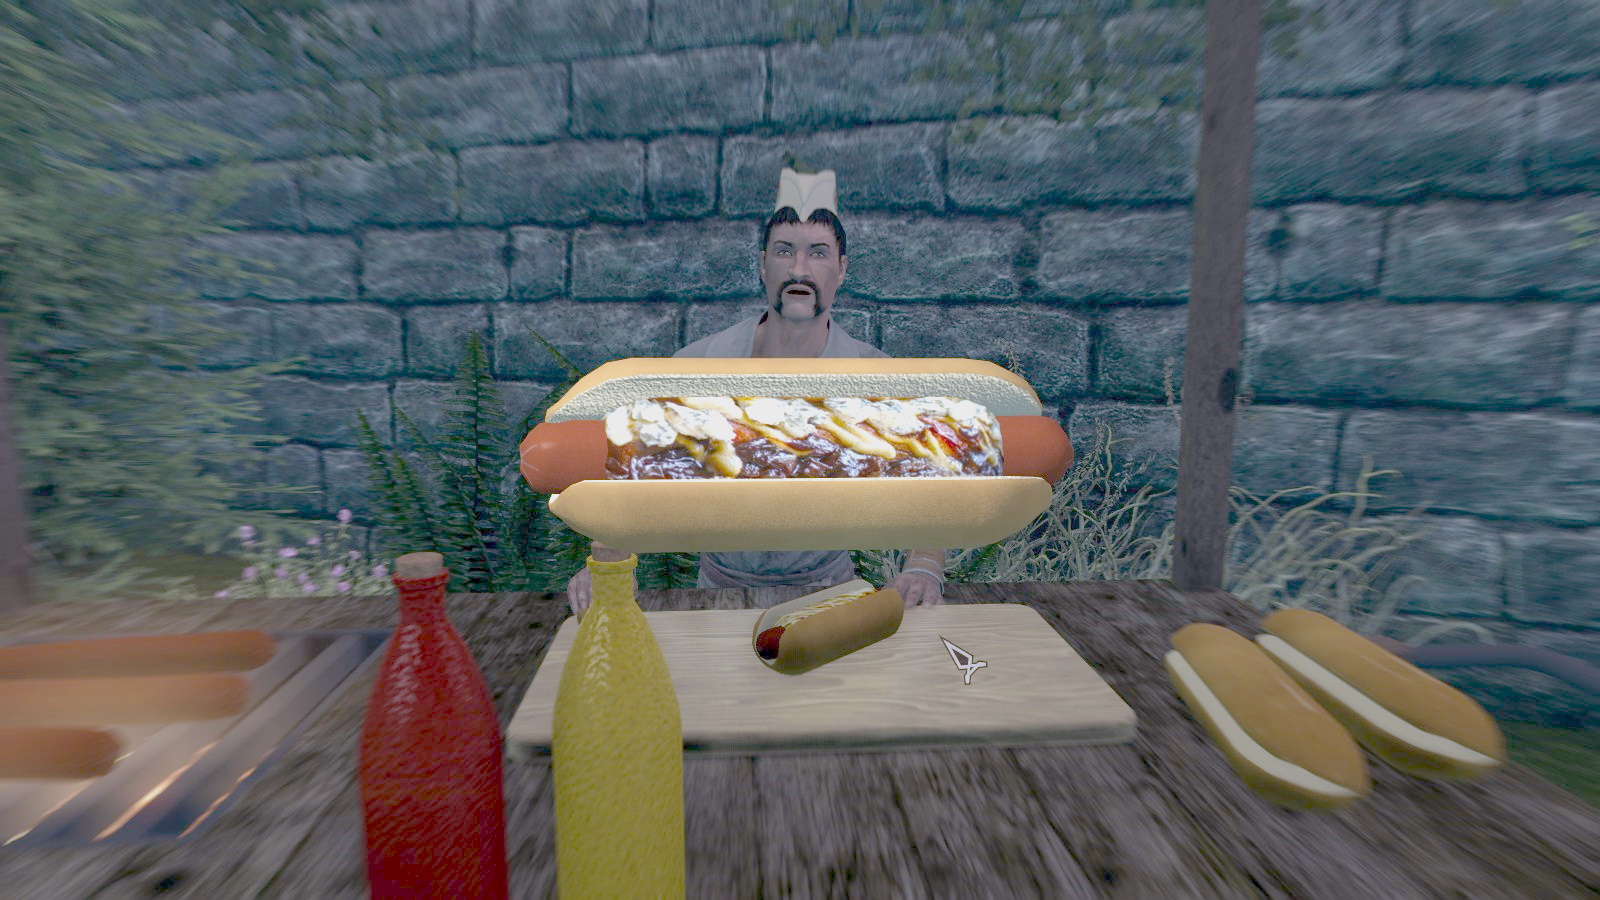 Finally, a Skyrim mod where you can get a good hot dog